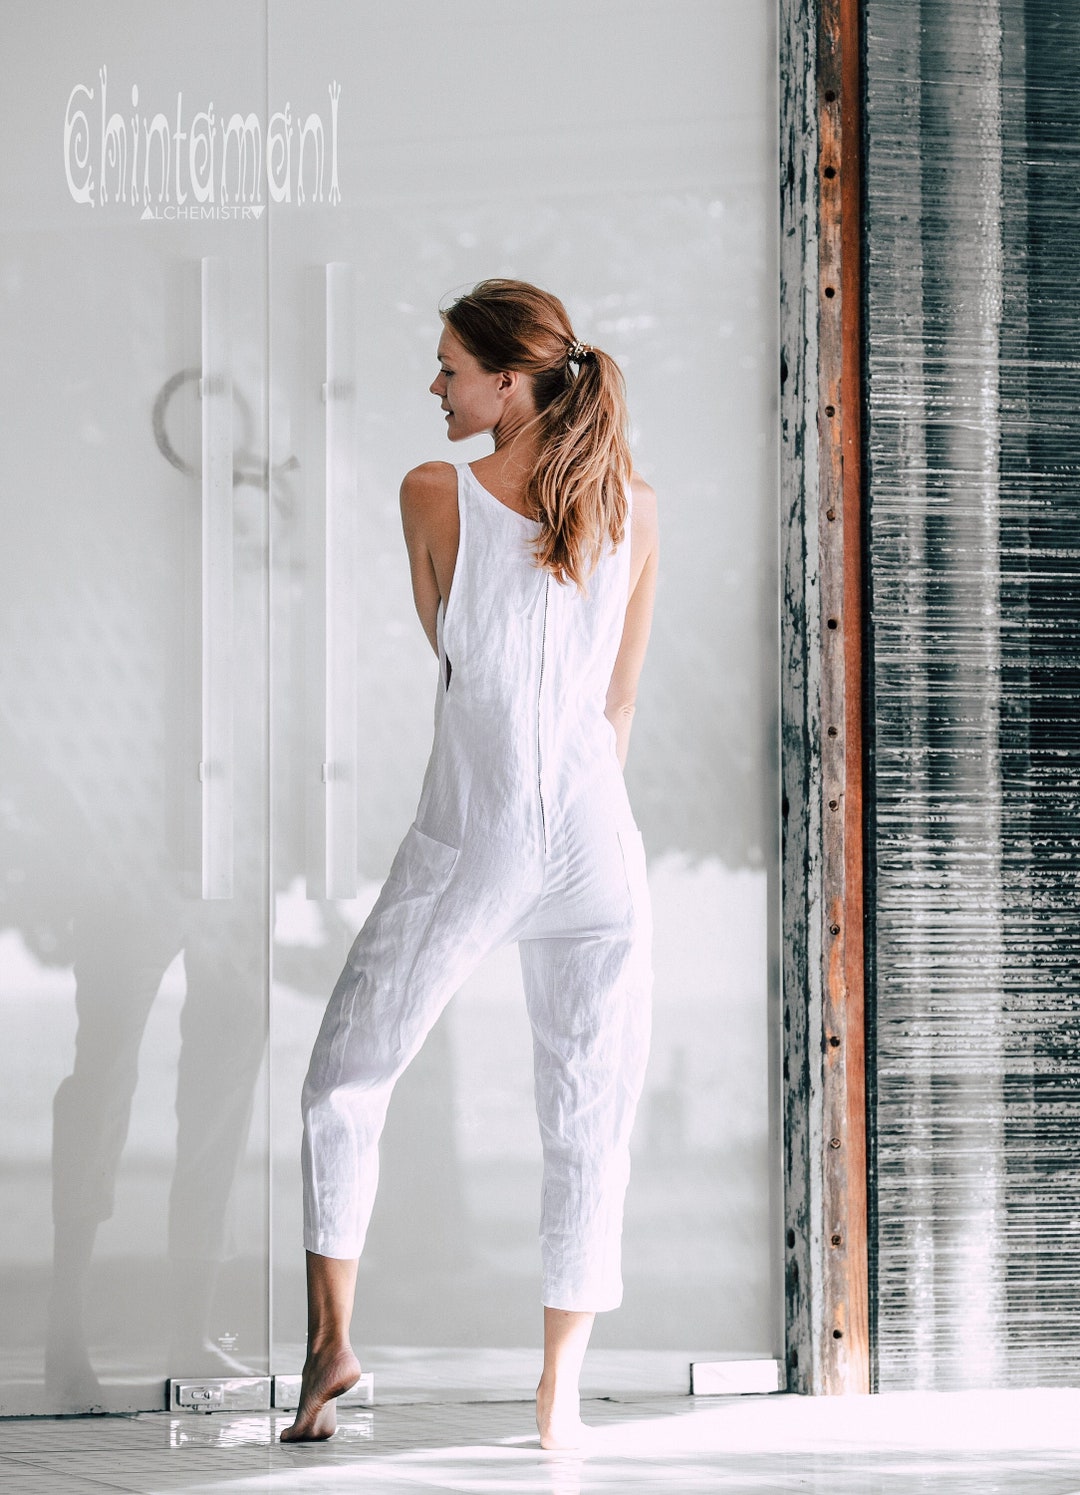 White Linen Jumpsuit Women Boho Clothing Fringe Organic Overalls Open Back  Zipper Jumpsuit Wide Linen Pants Romper Women Comfy Clothes -  Canada